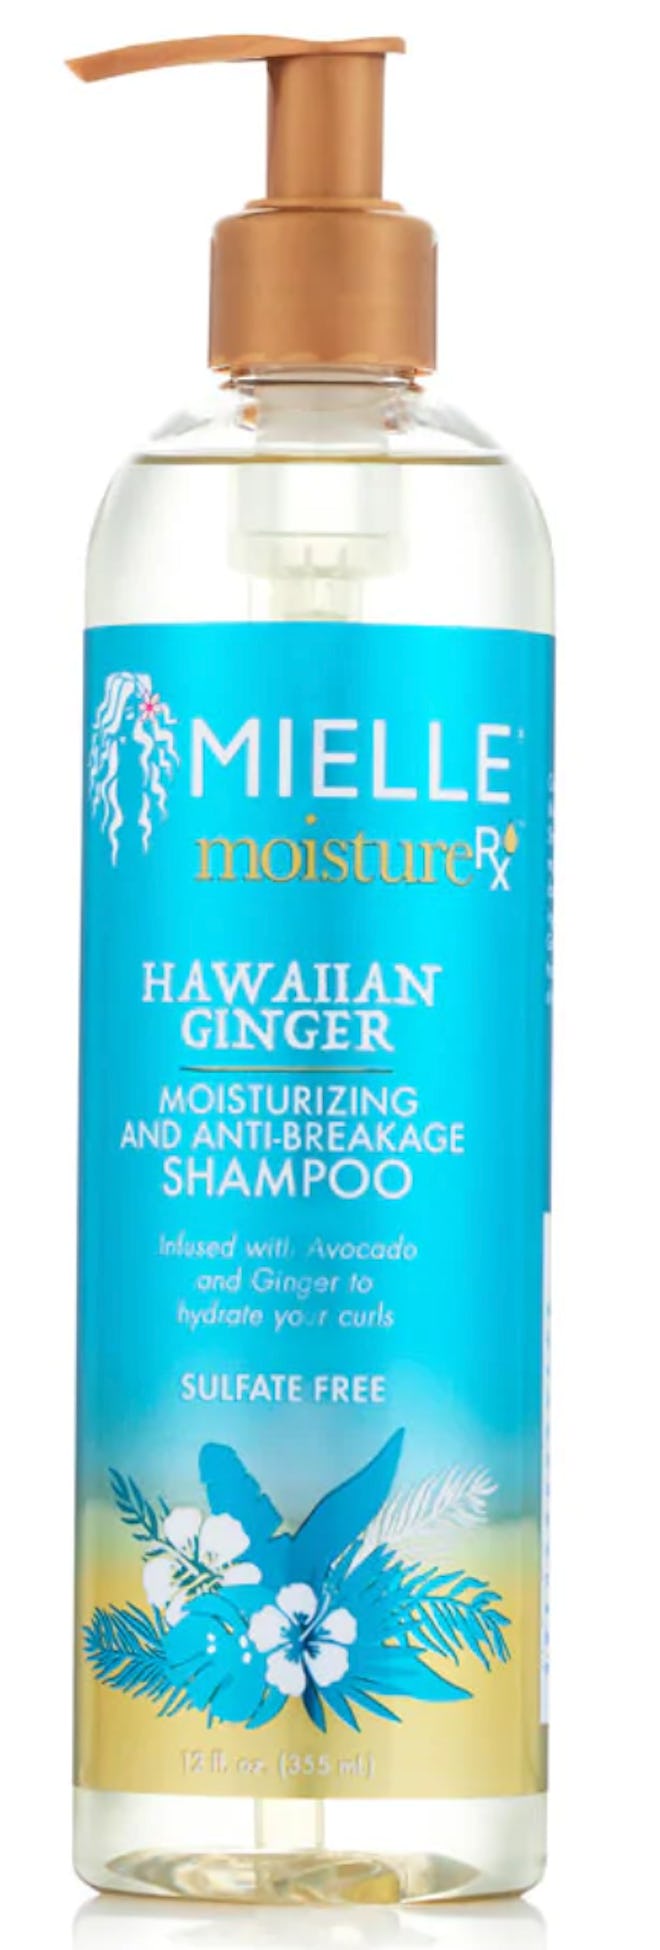 Mielle Moisture RX Hawaiian Ginger Moisturizing & Anti-Breakage Shampoo for dry hair